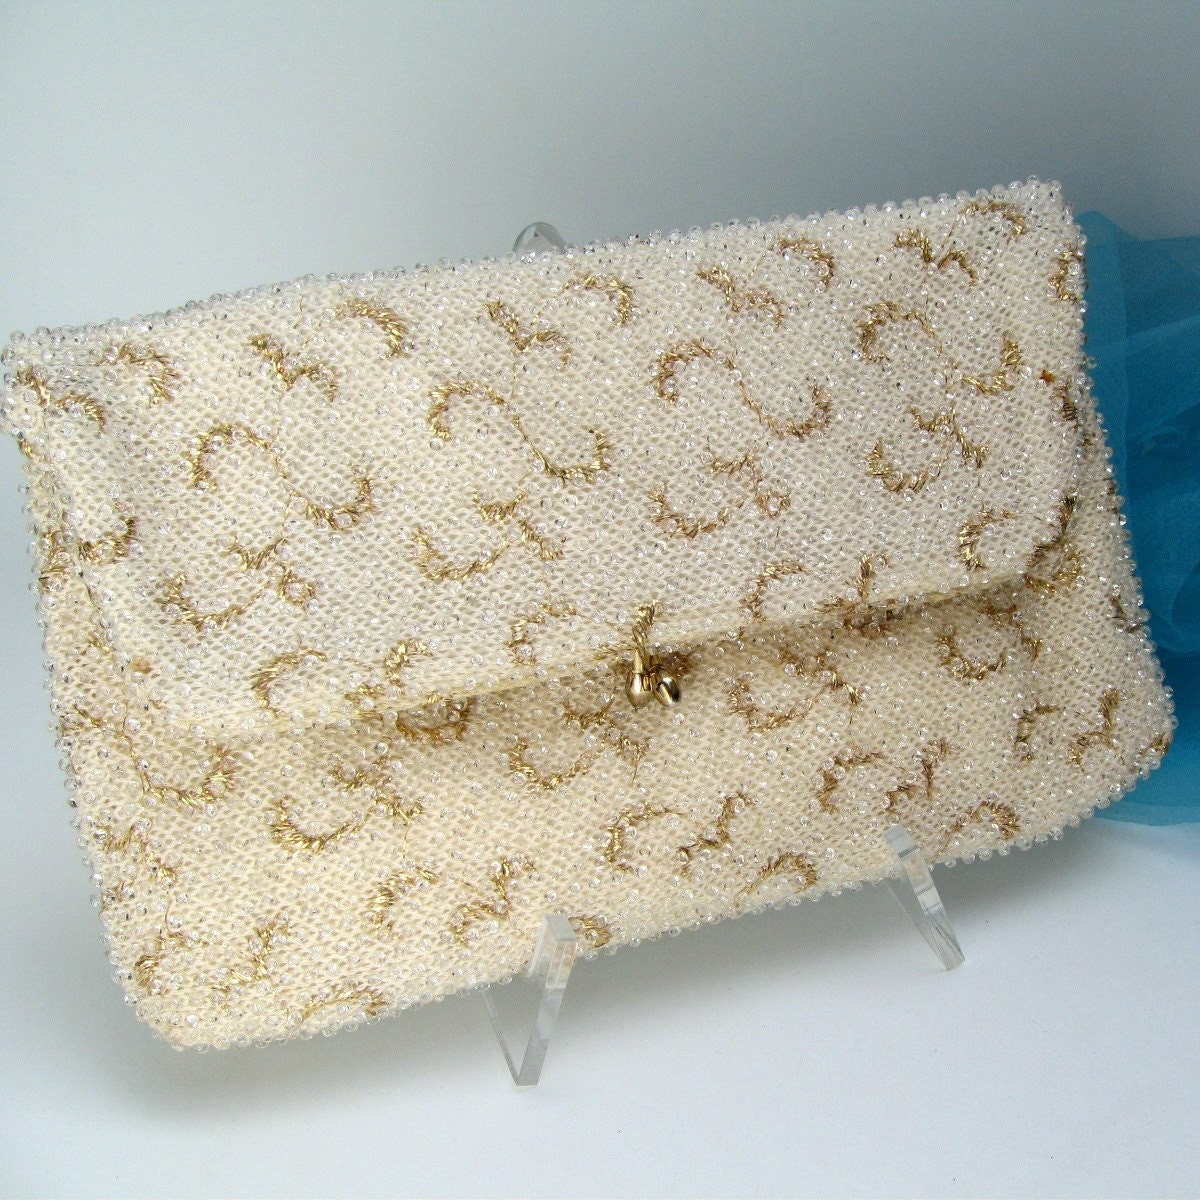 1950s 60s vintage caviar beaded folding clutch handbag purse - corde bead by lumured - ivory white